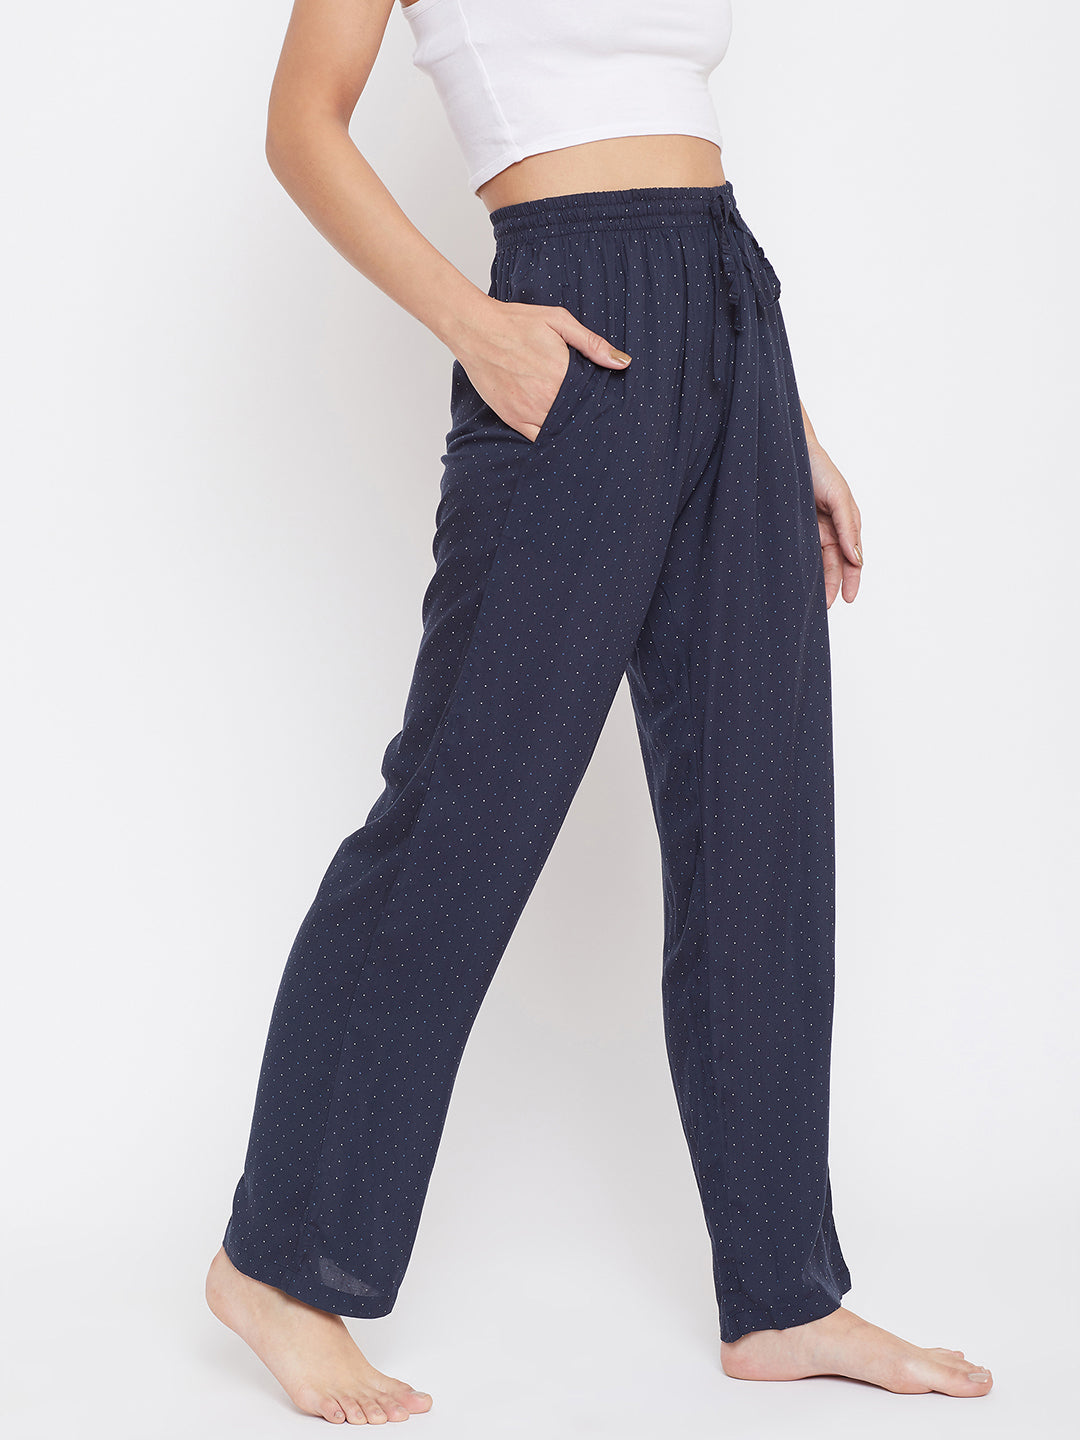 Navy Blue Cotton Lounge Pants - Women Lounge Pants